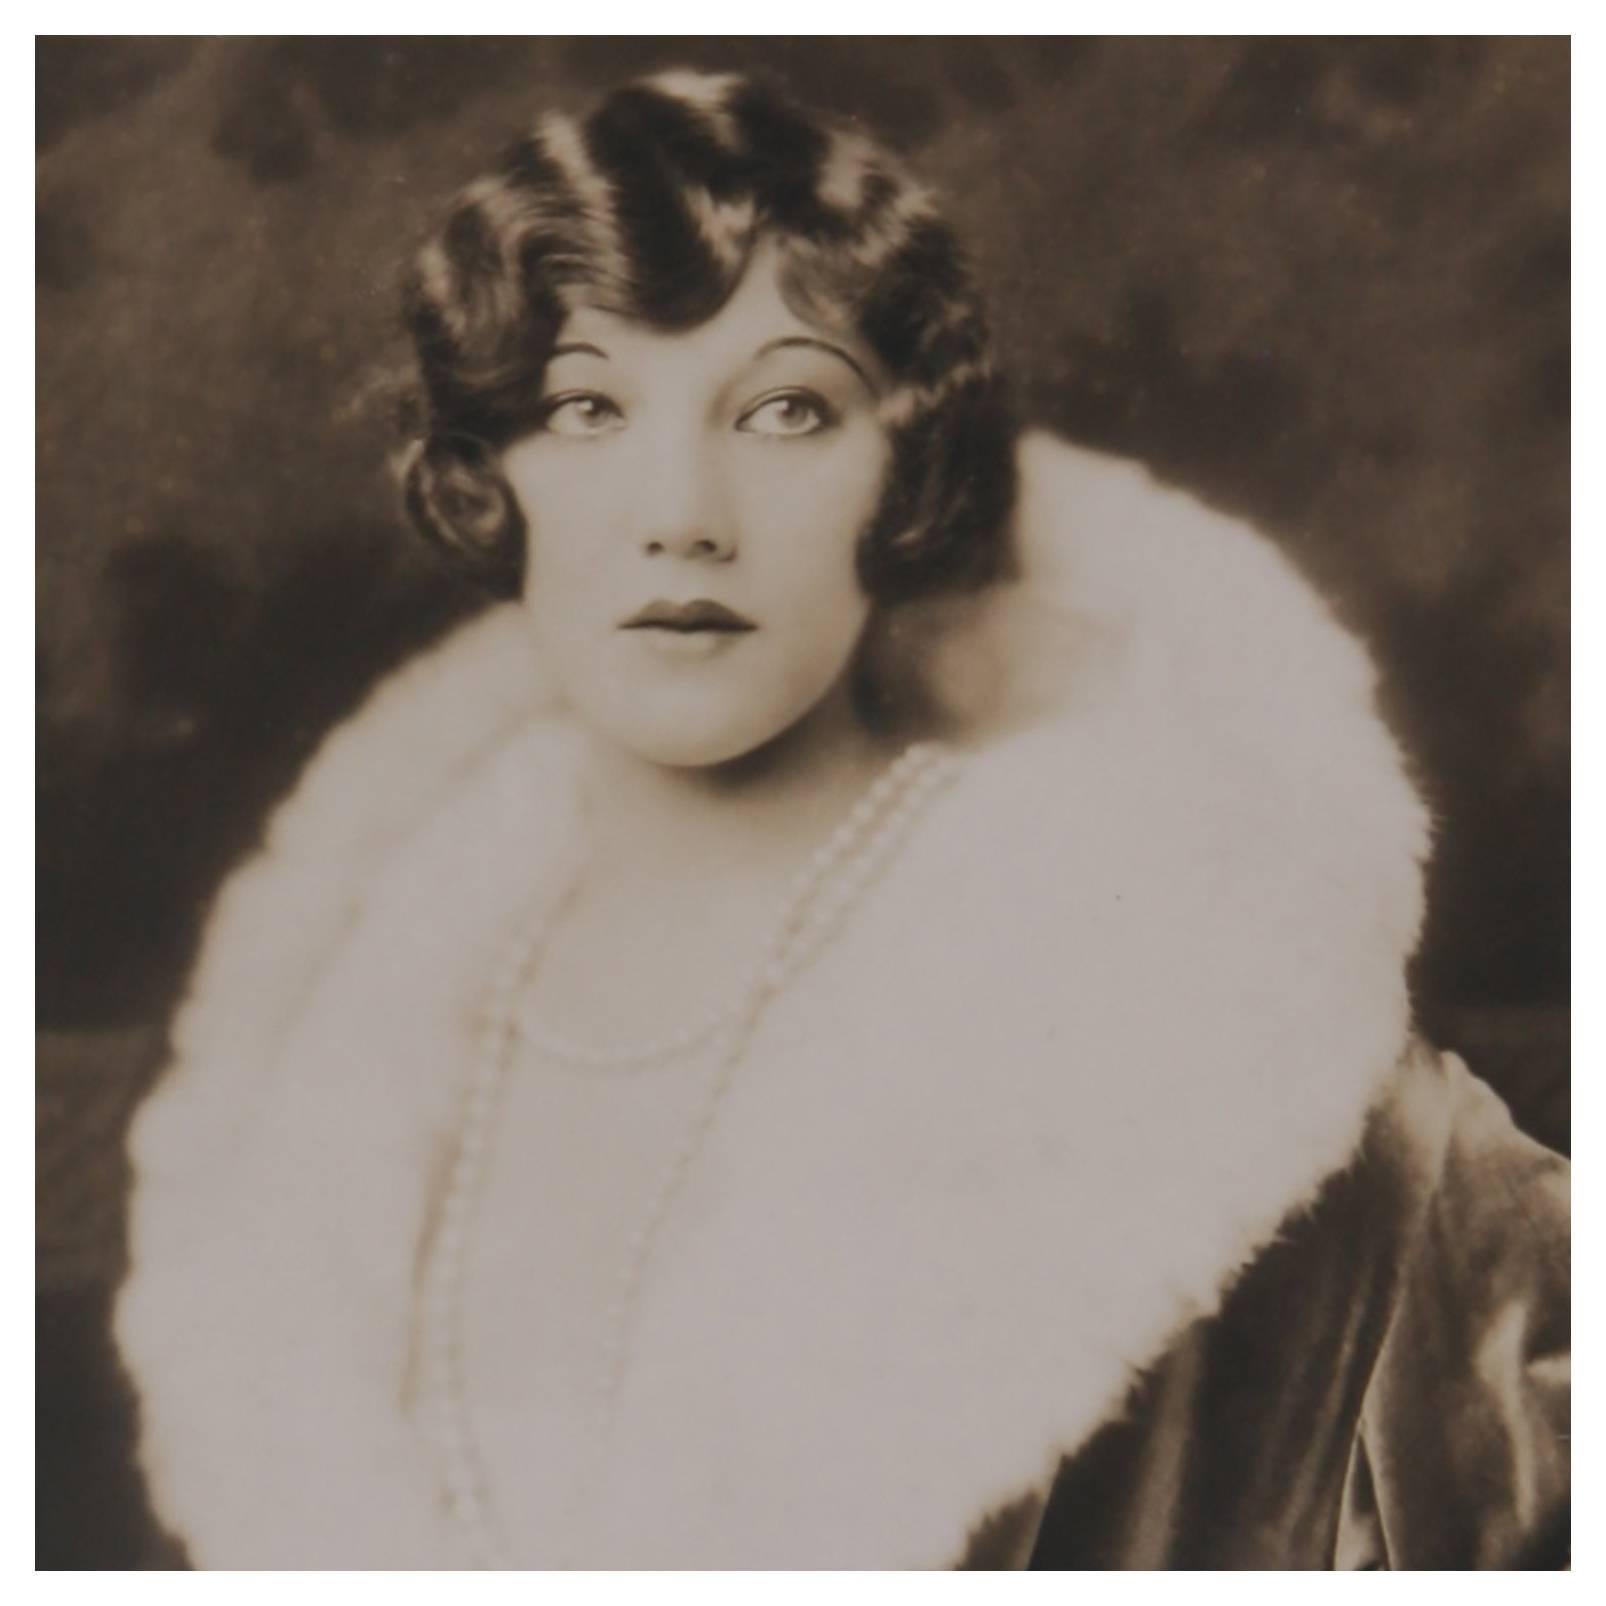 Ziegfeld Follies Photograph, USA, circa 1920